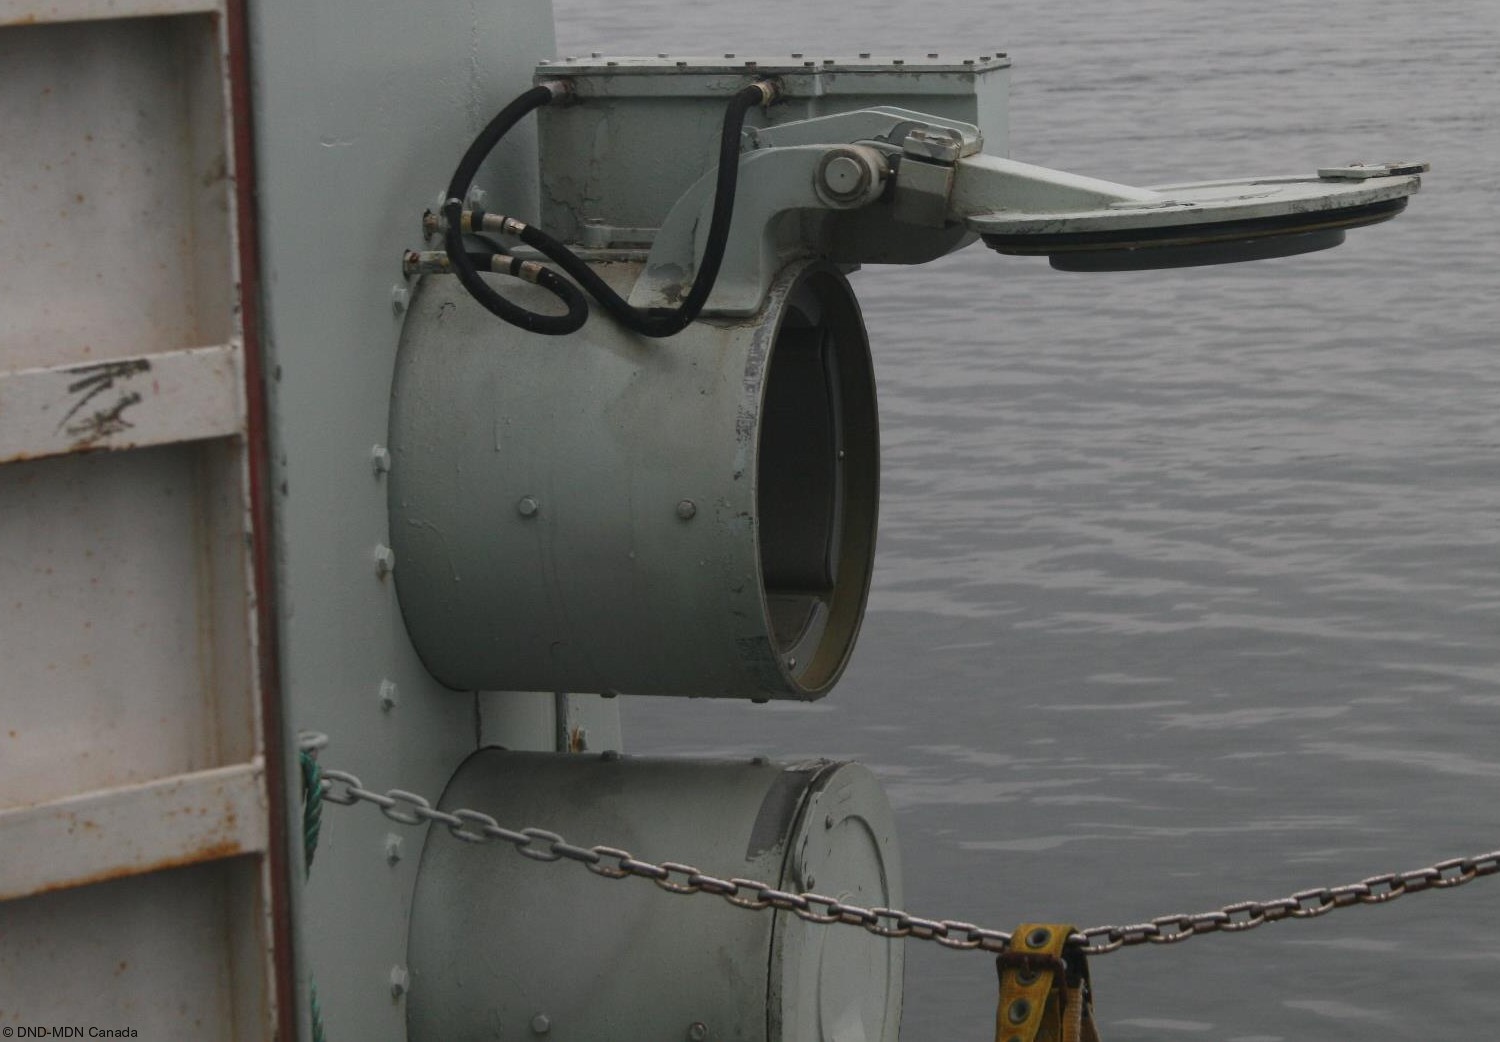 ffh-333 hmcs toronto halifax class helicopter patrol frigate ncsm royal canadian navy 34 torpedo tubes